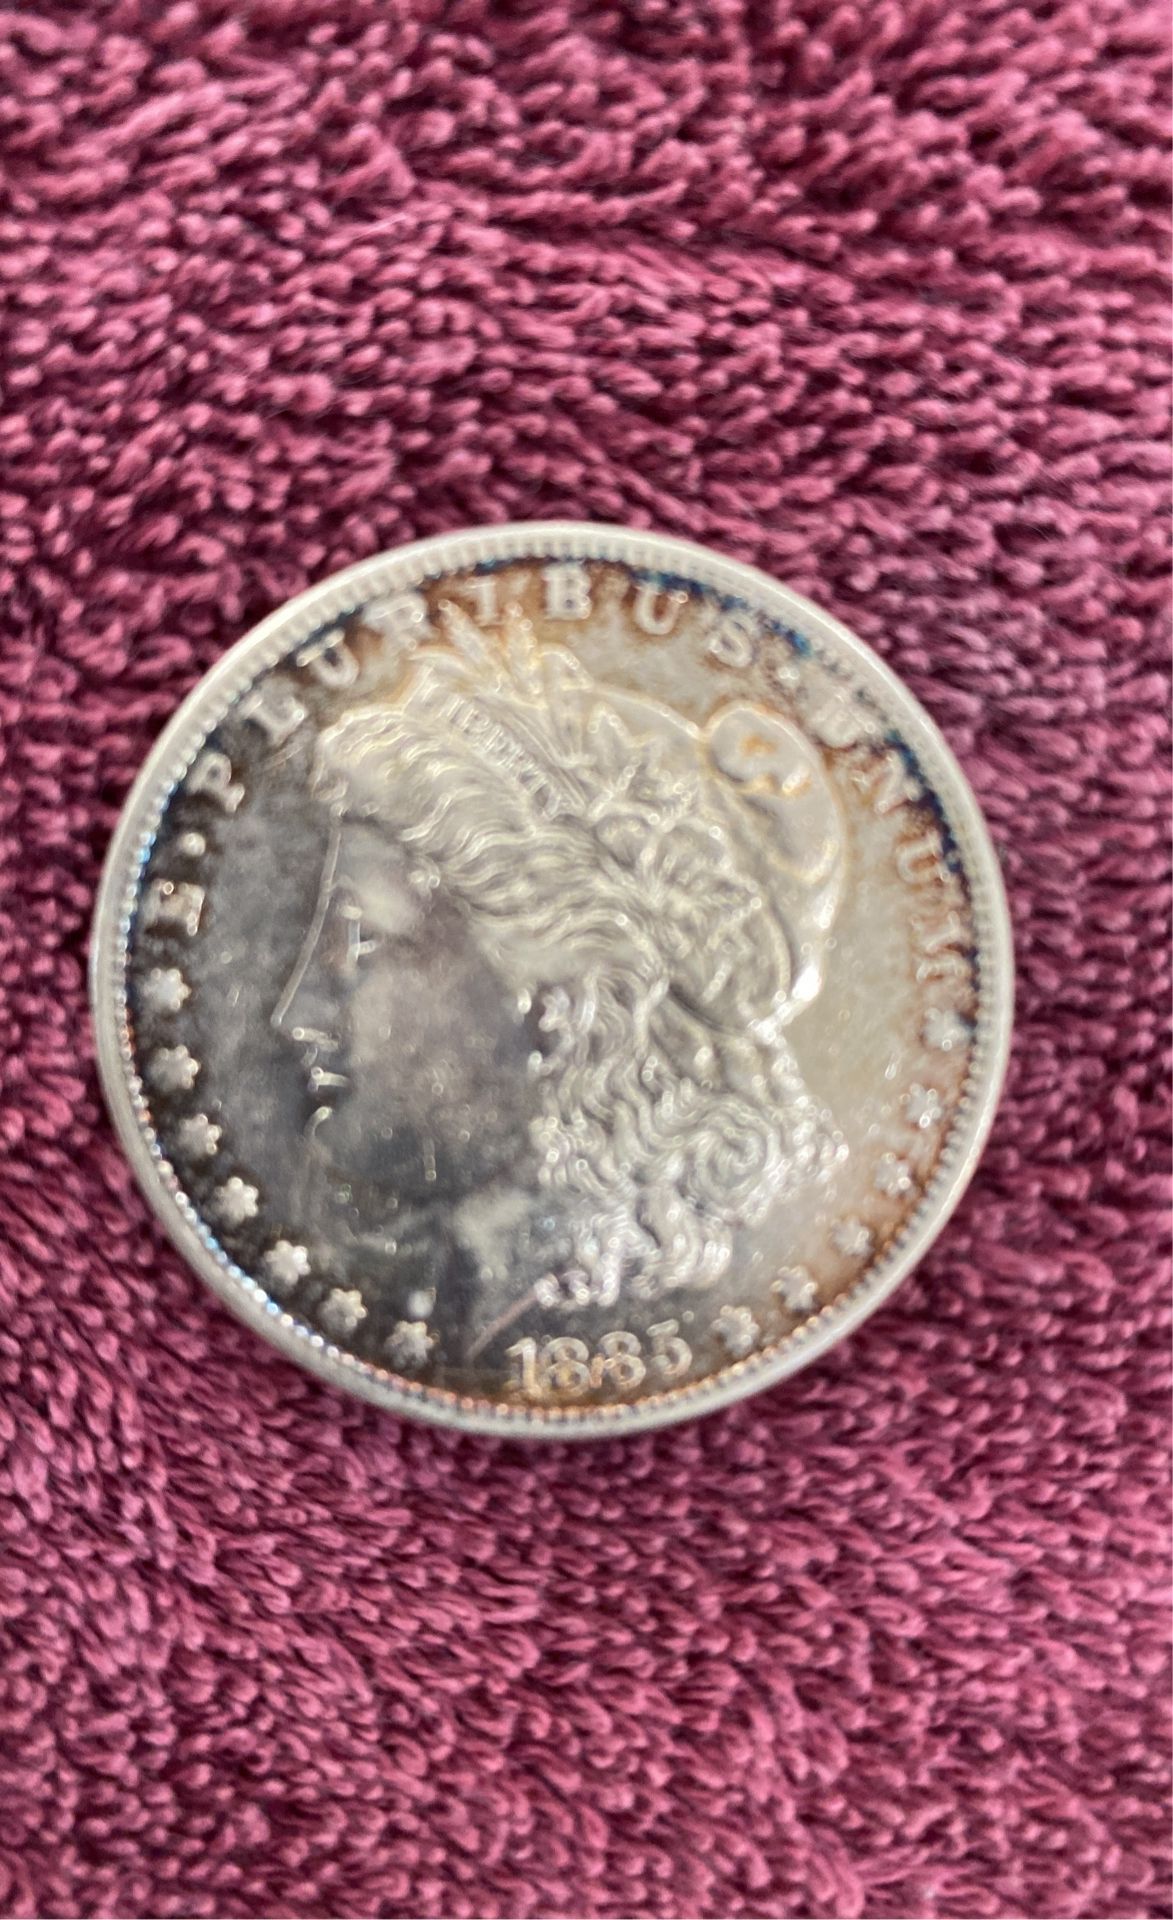 1885-S MORGAN SILVER DOLLAR